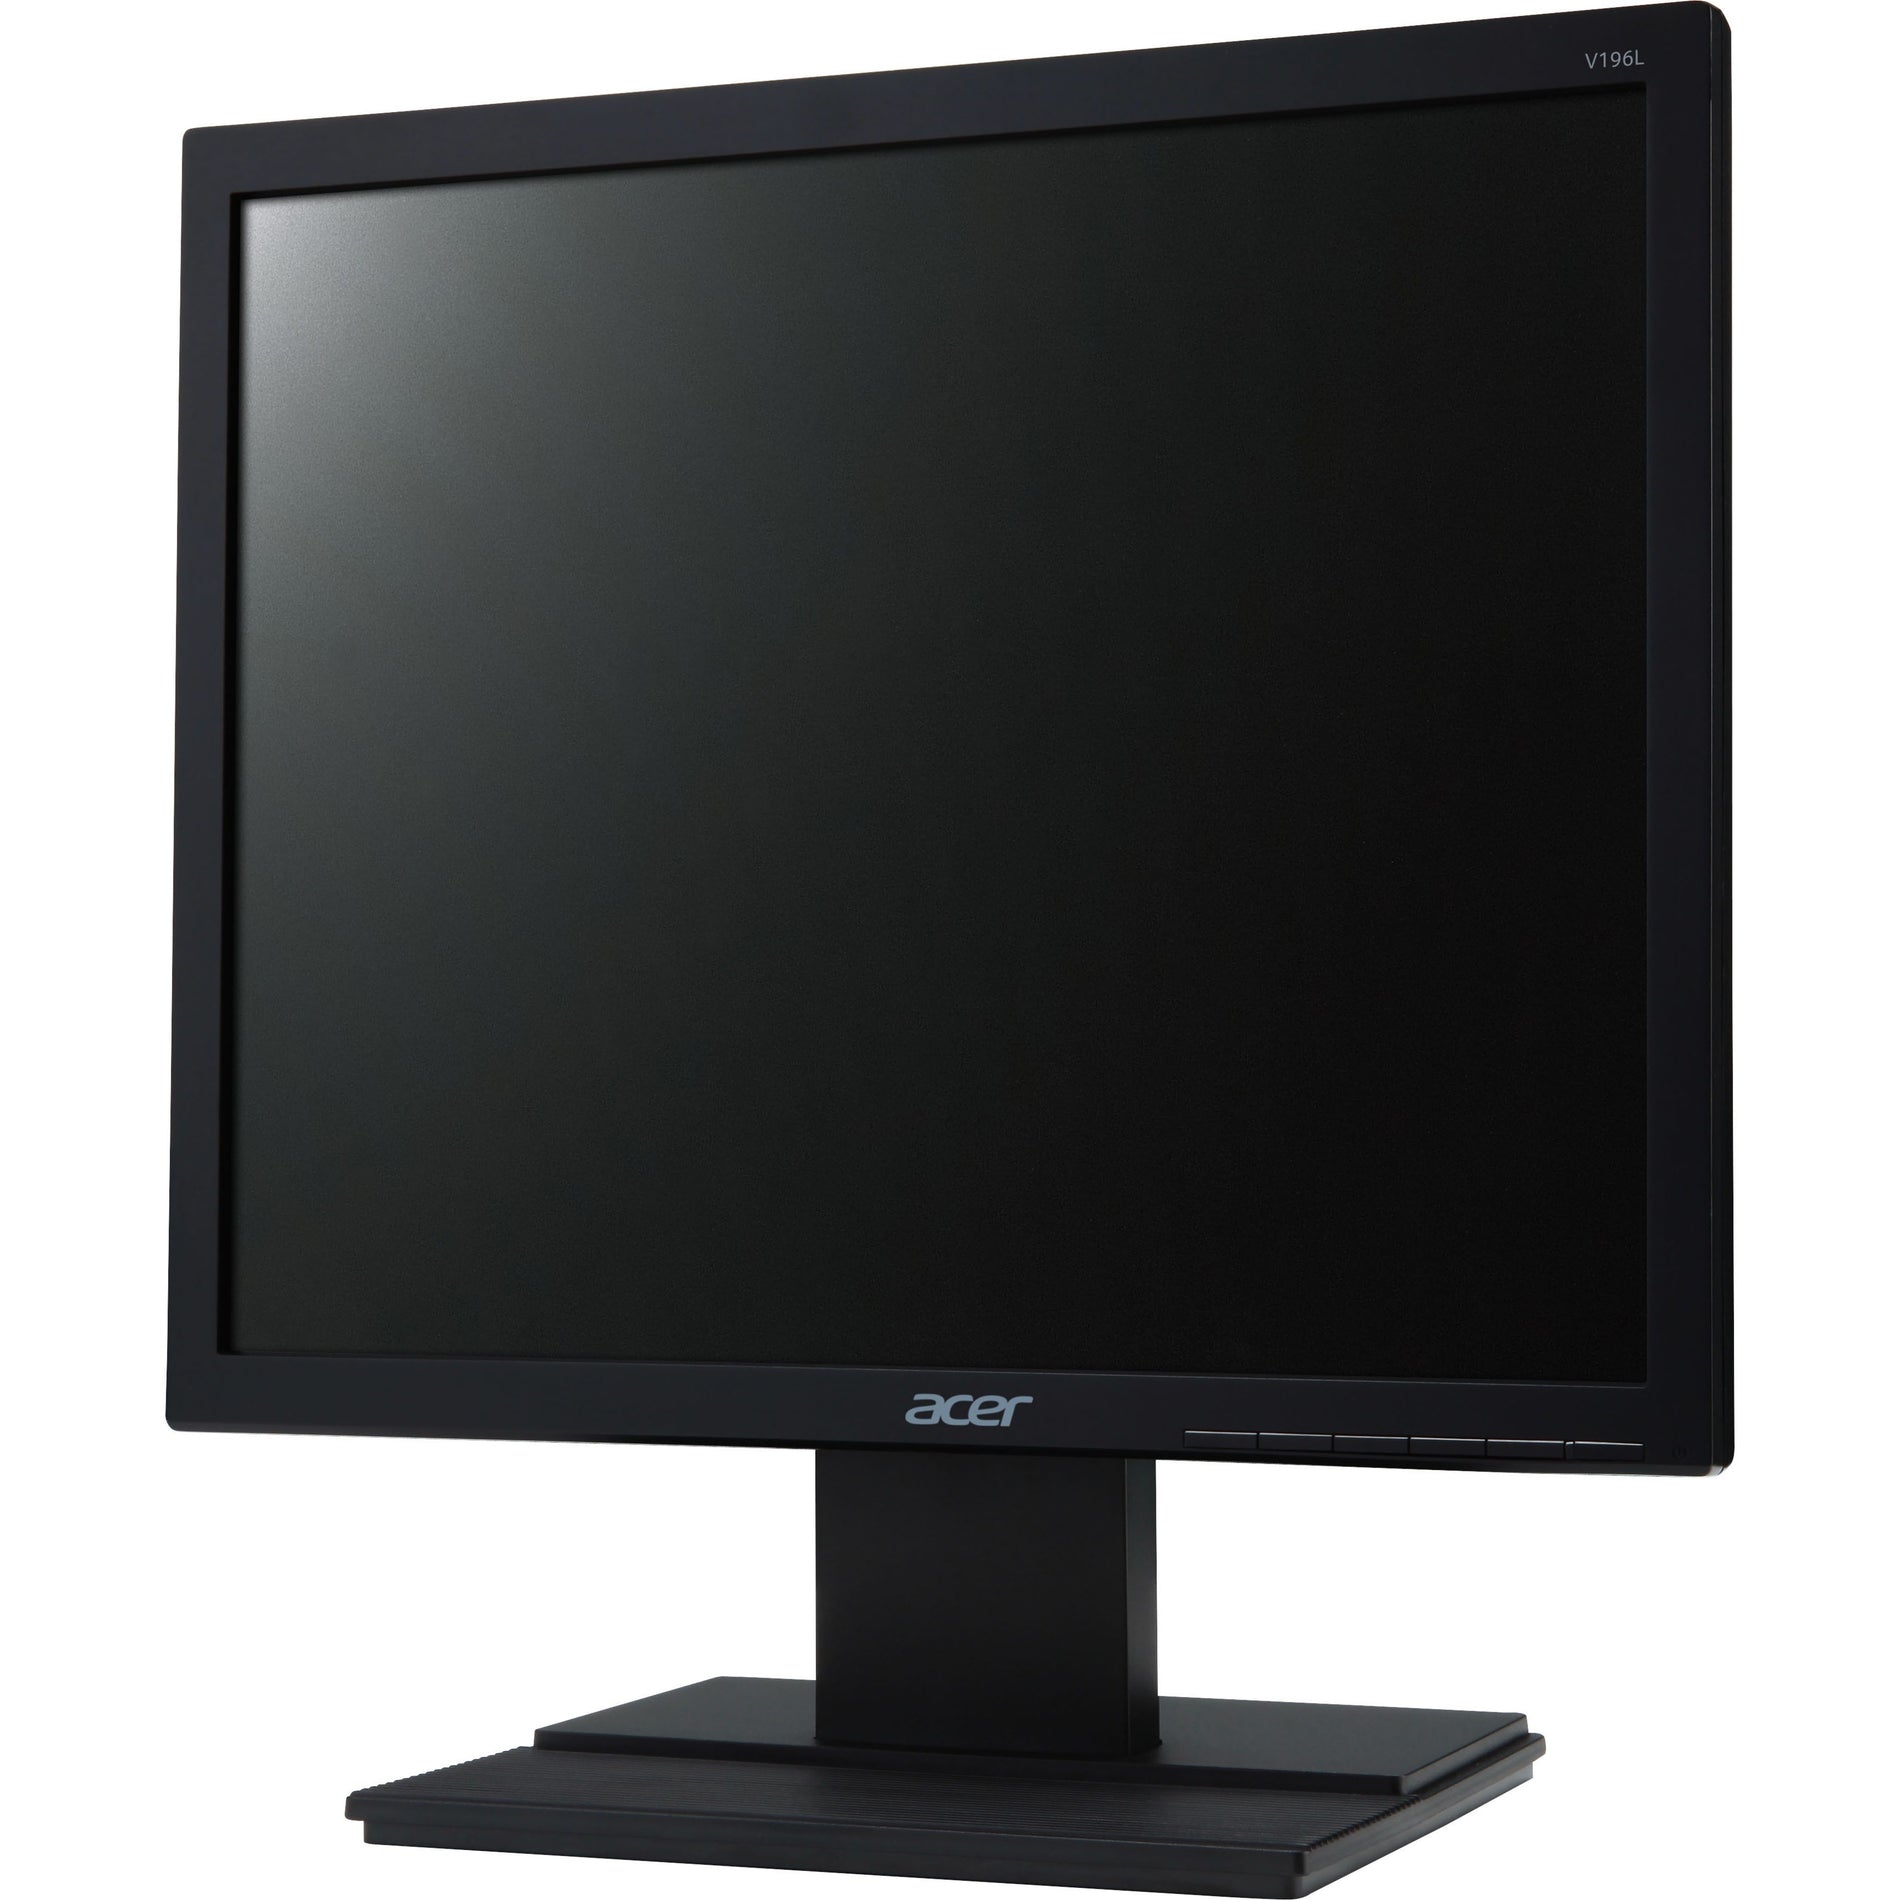 Acer UM.CV6AA.B02 V196L LCD Monitor, 19" 5:4 5ms 250 Nit LED, VGA, TCO Certified